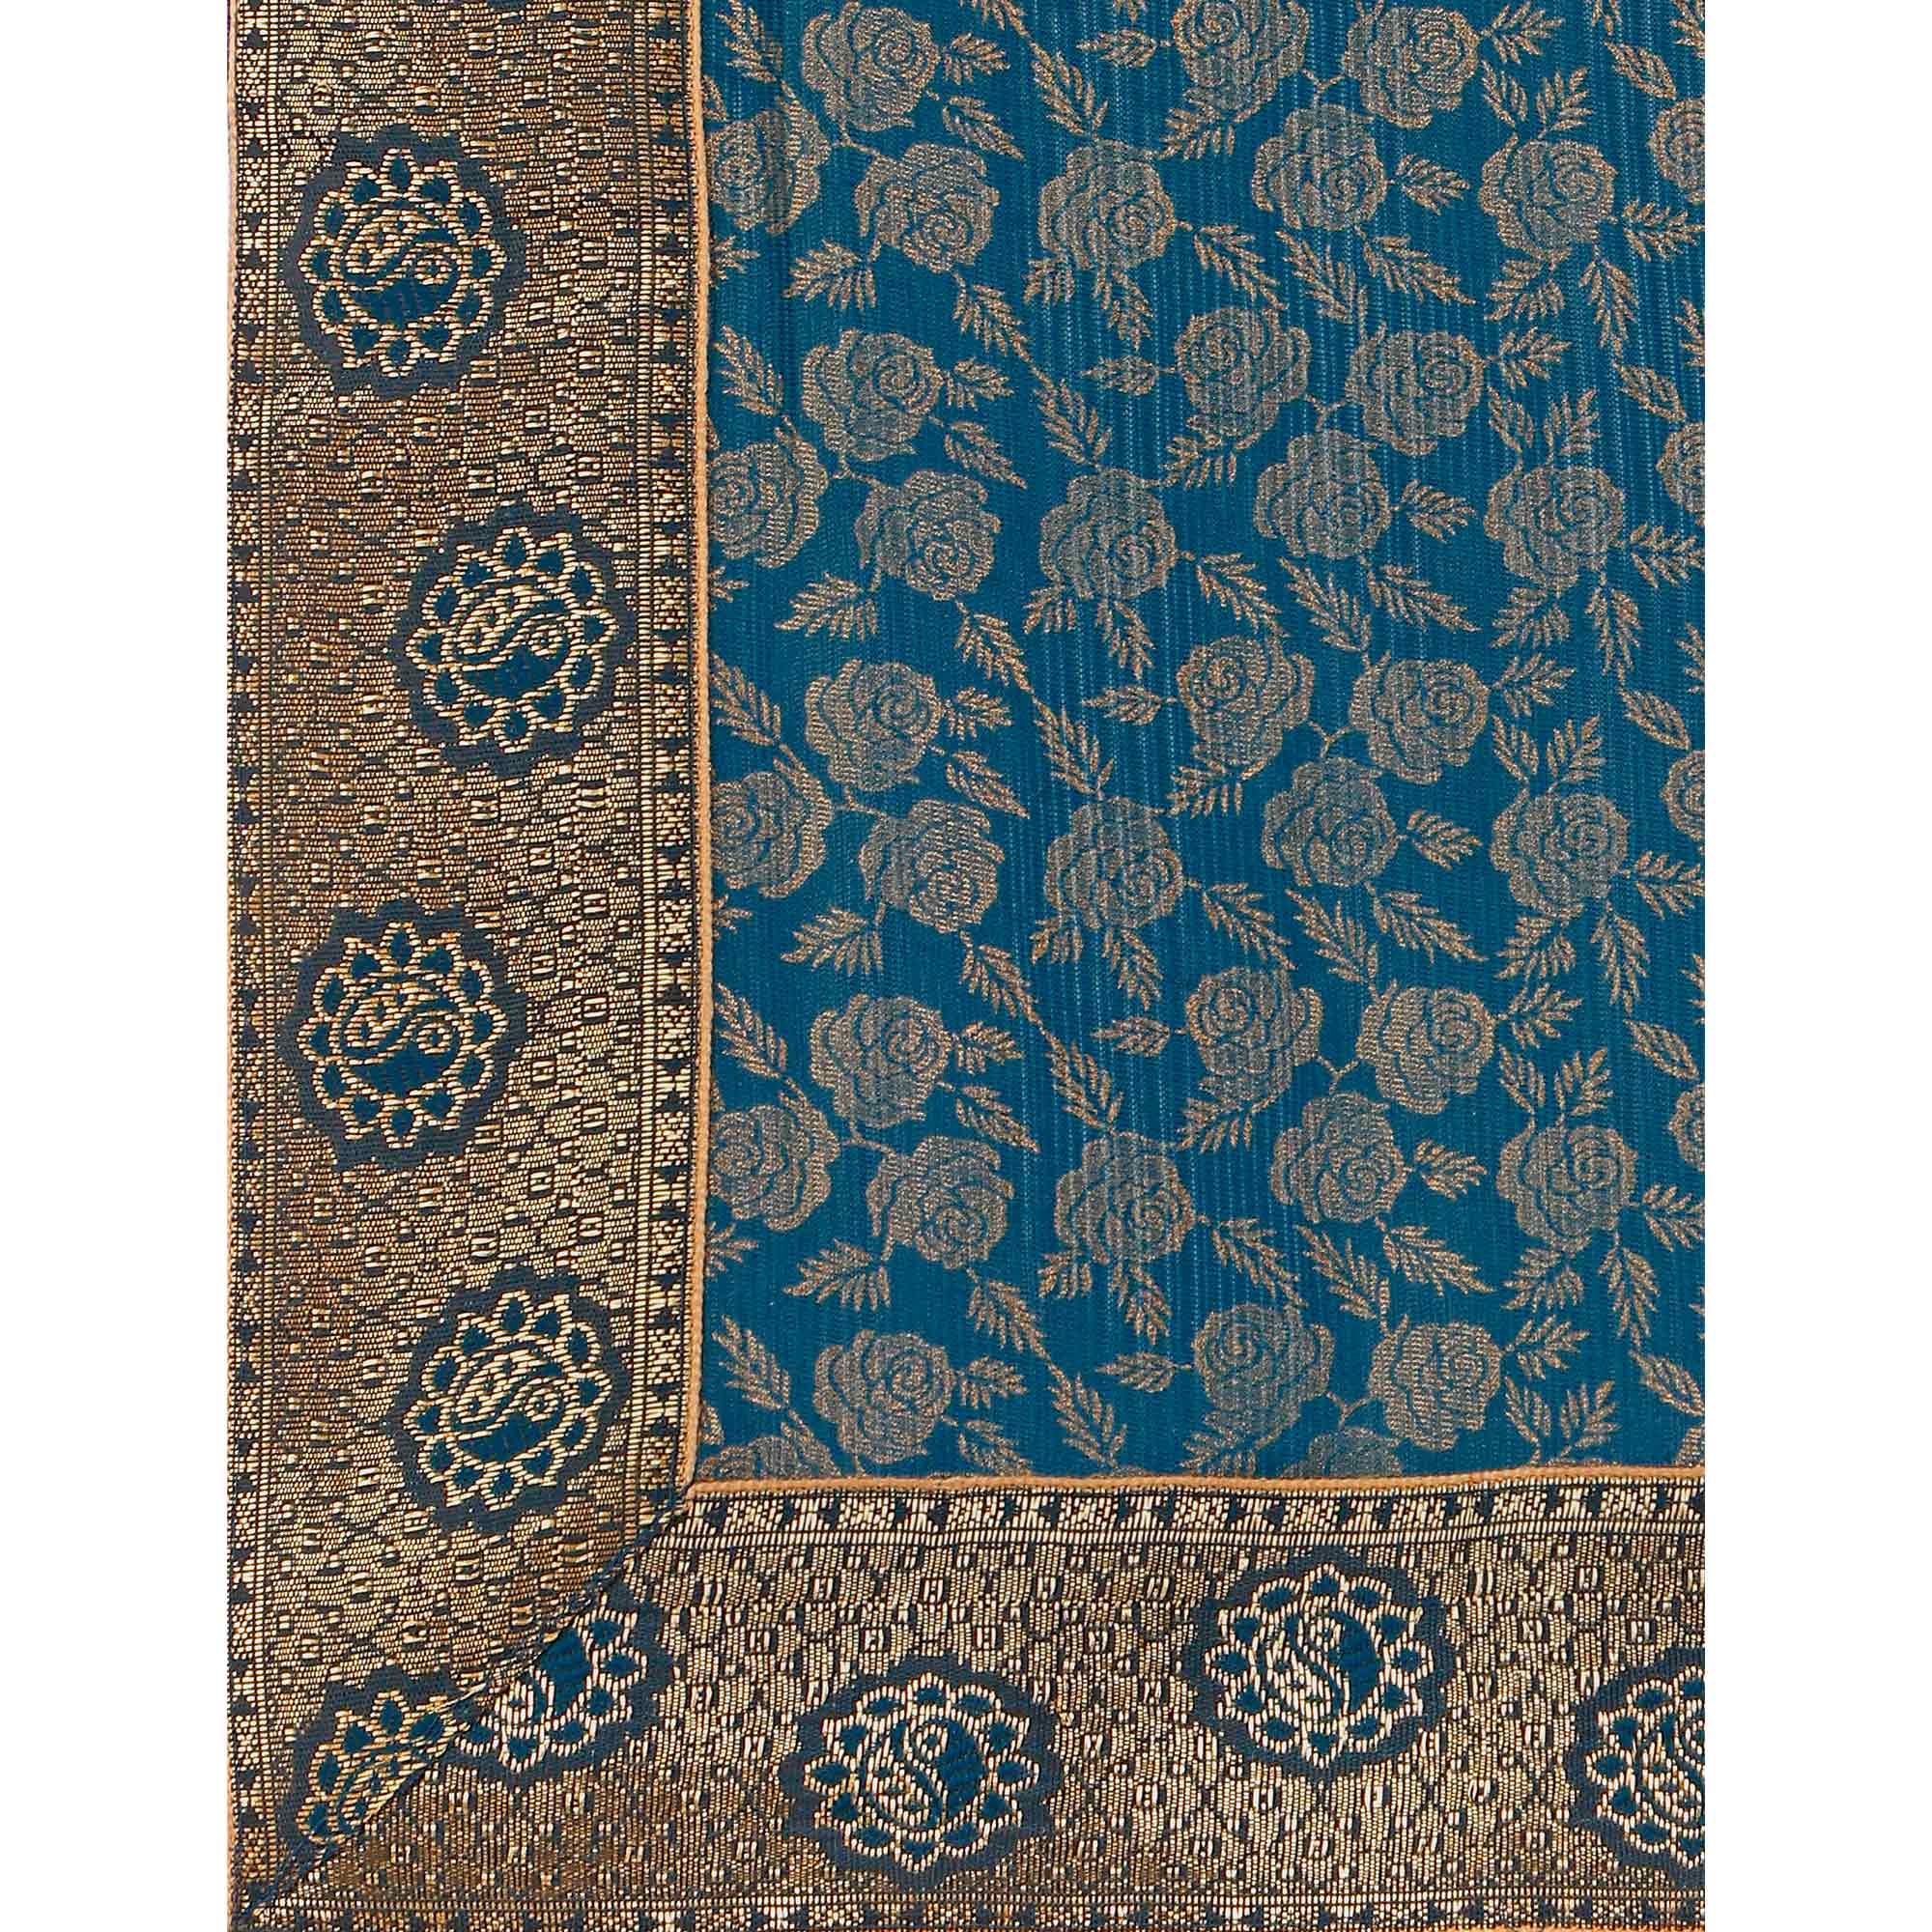 Teal Blue Floral Handloom Woven Rayon Saree